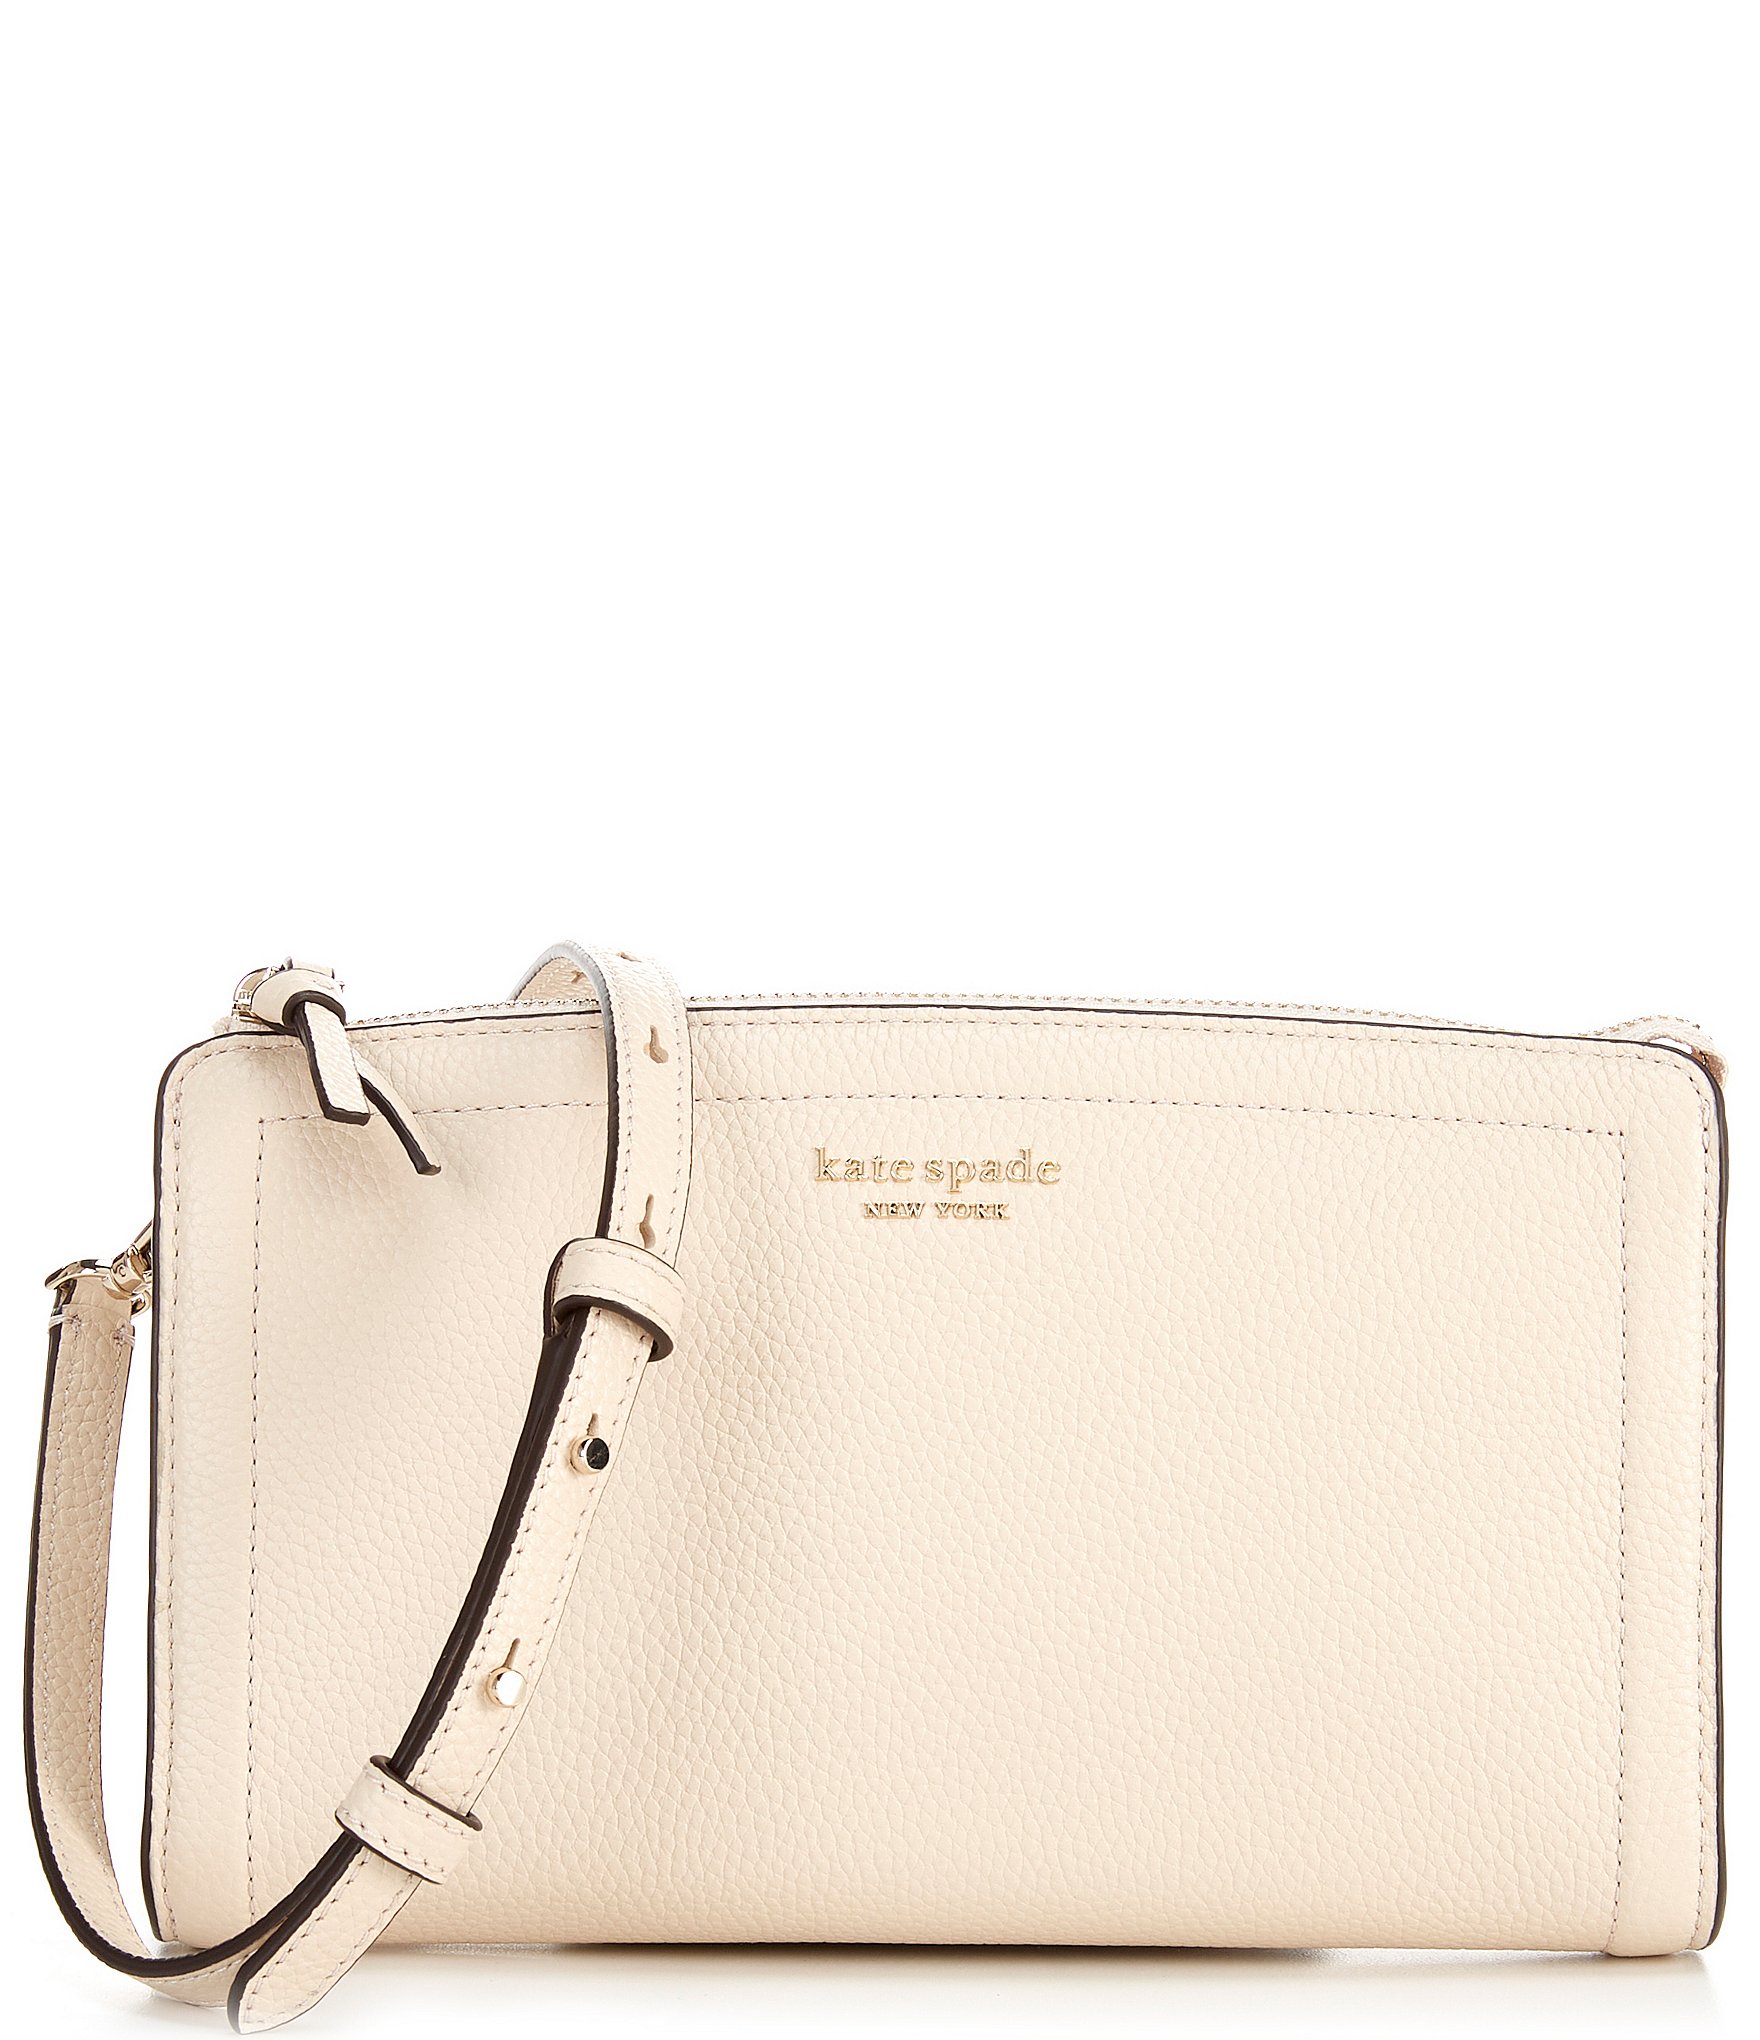 kate spade new york Ivory Handbags, Purses & Wallets | Dillard's